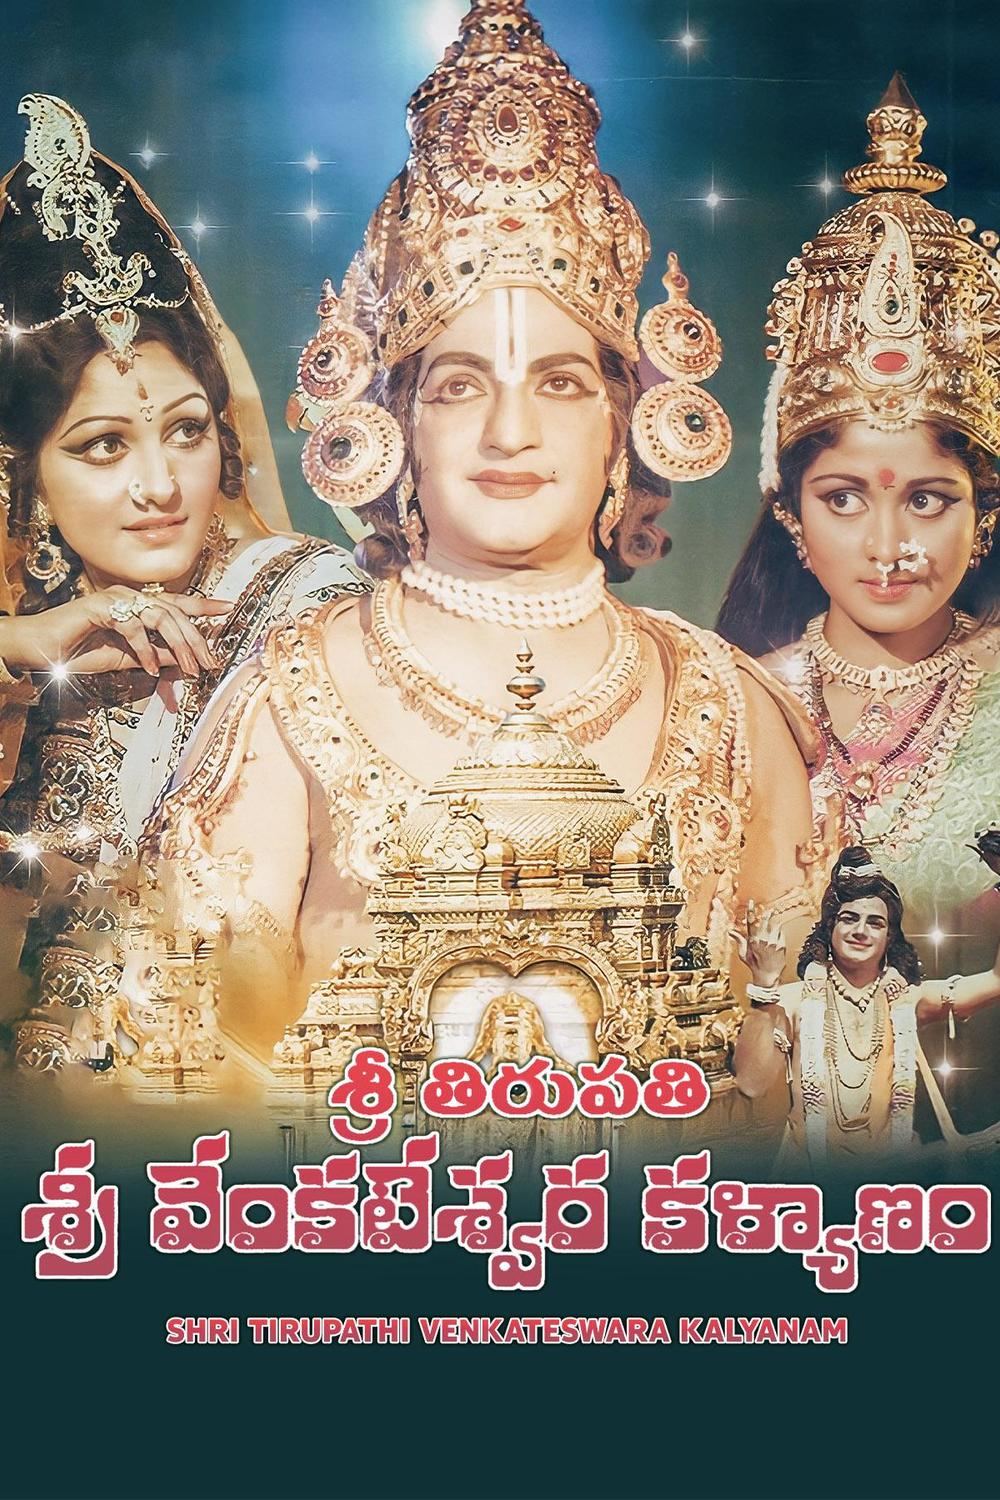 Shri Tirupathi Venkateswara Kalyanam